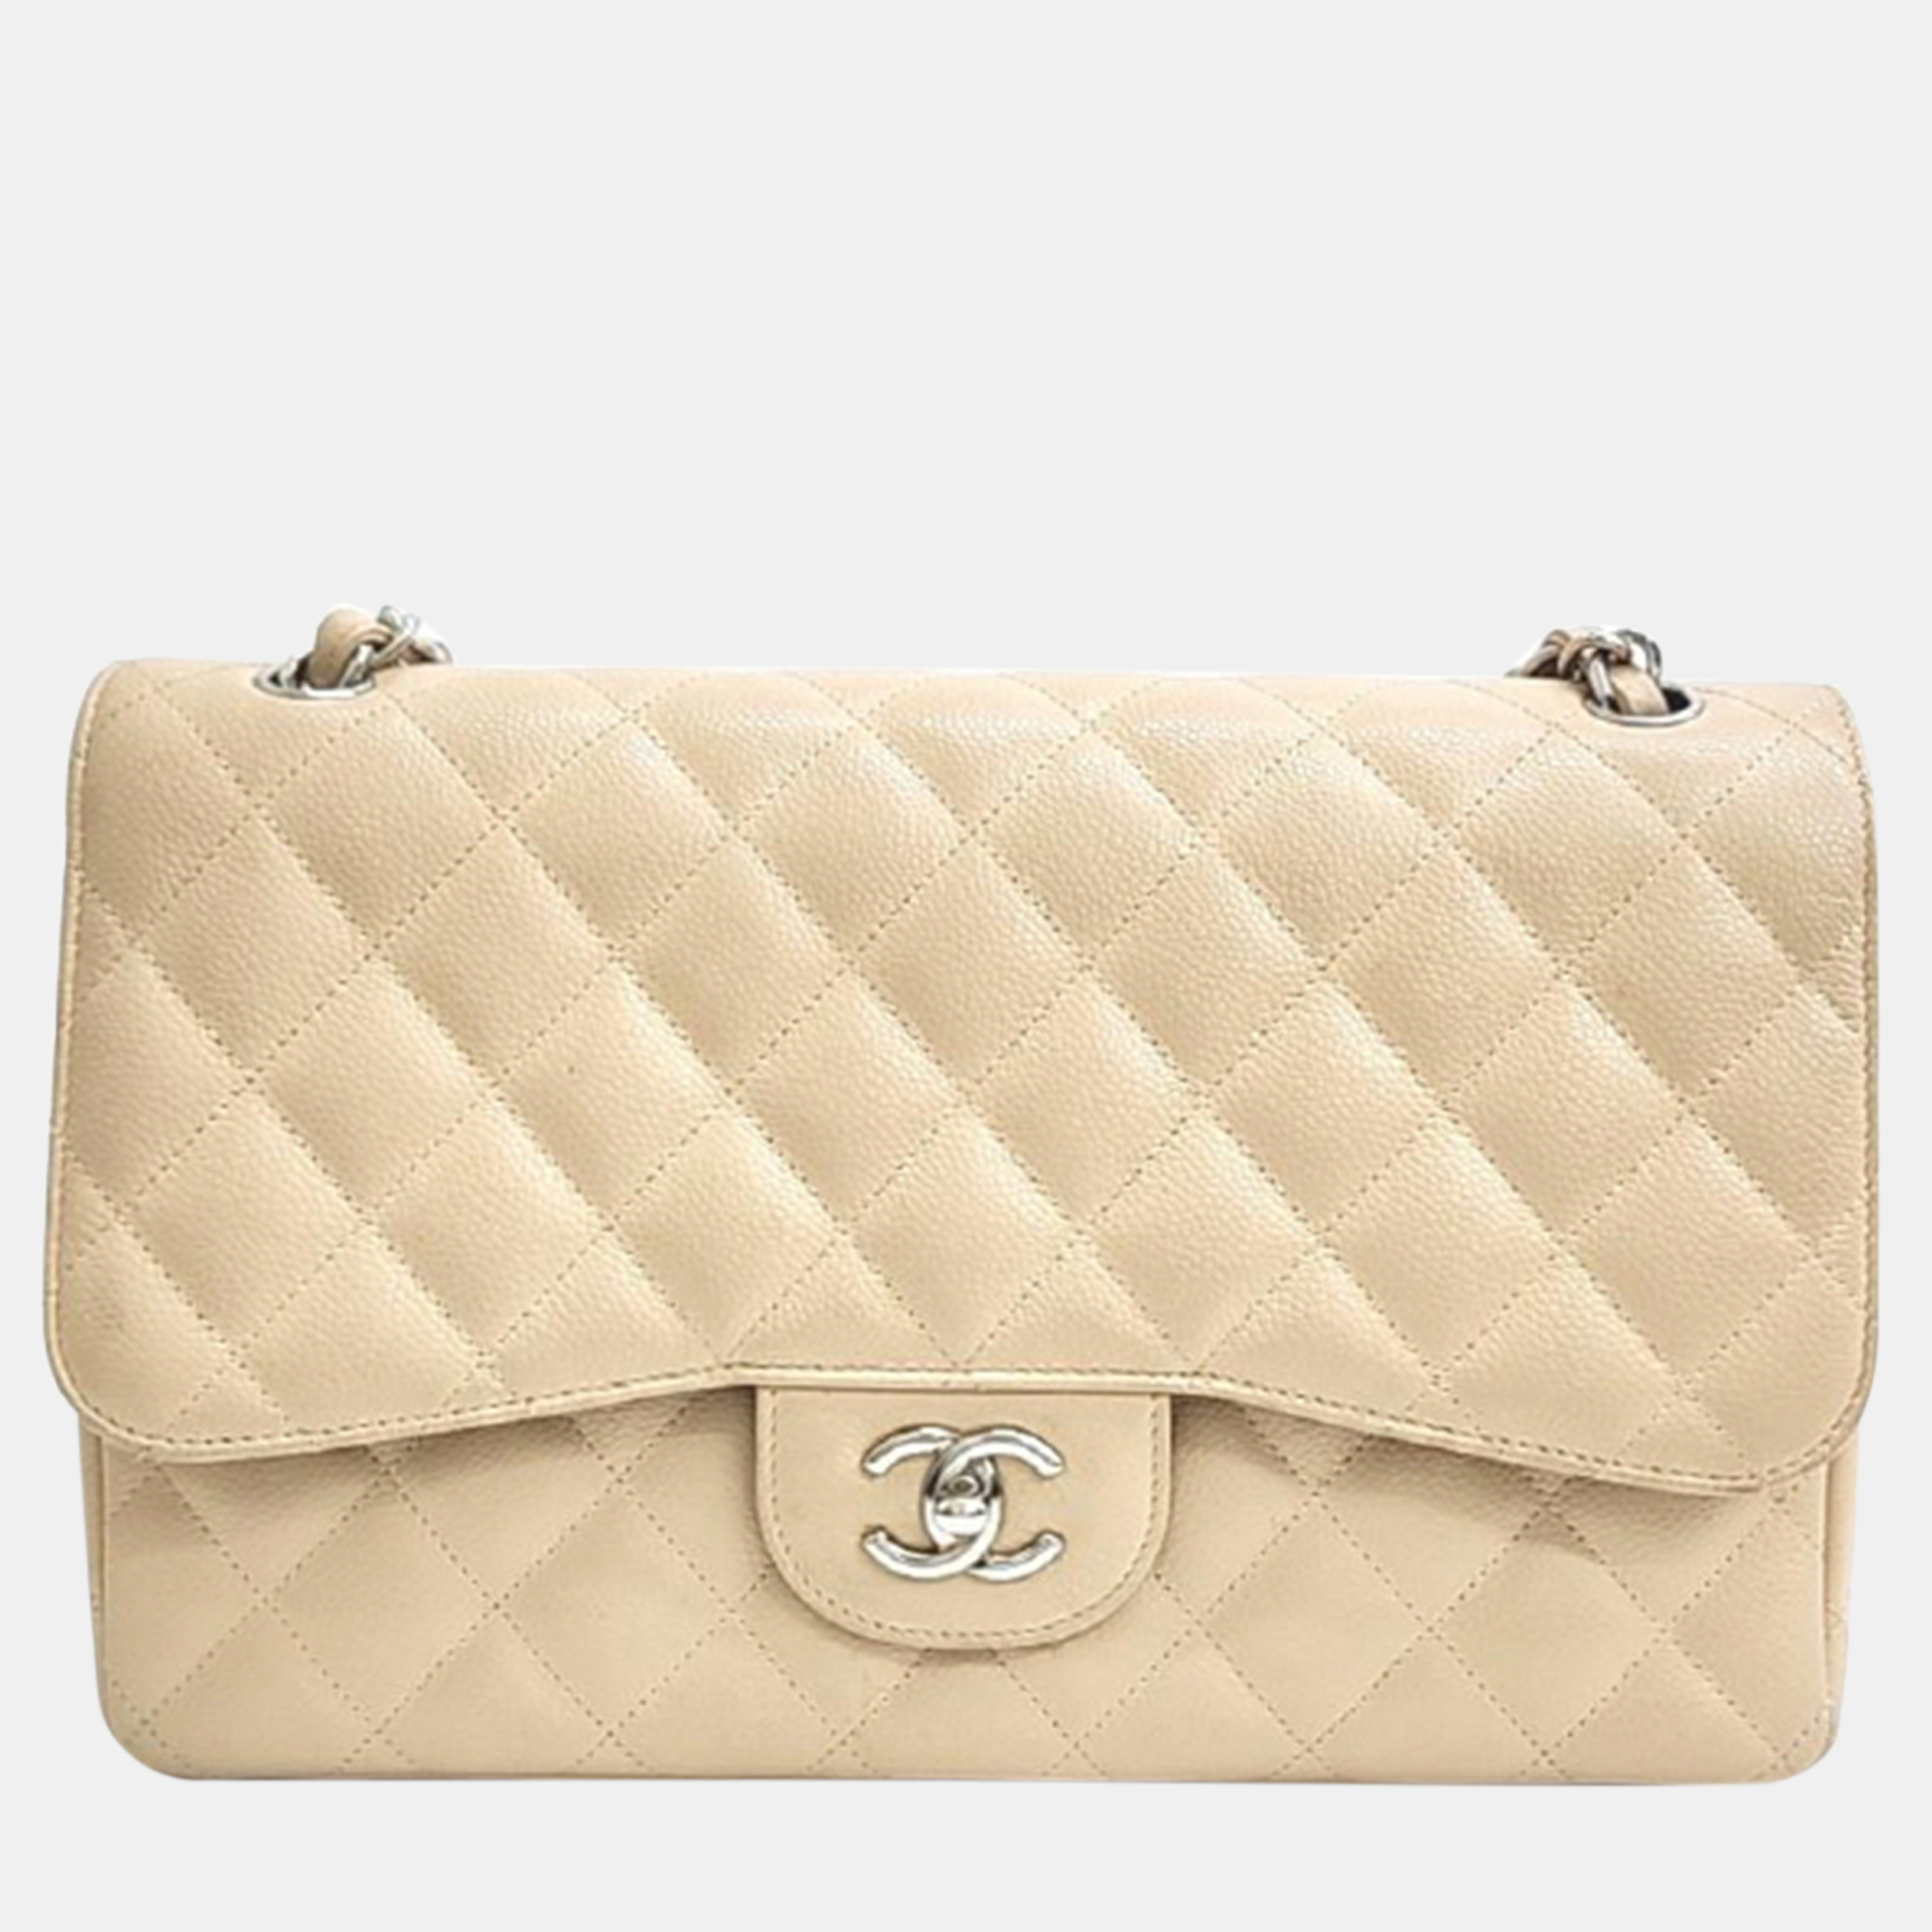 Chanel beige caviar leather classic jumbo bag